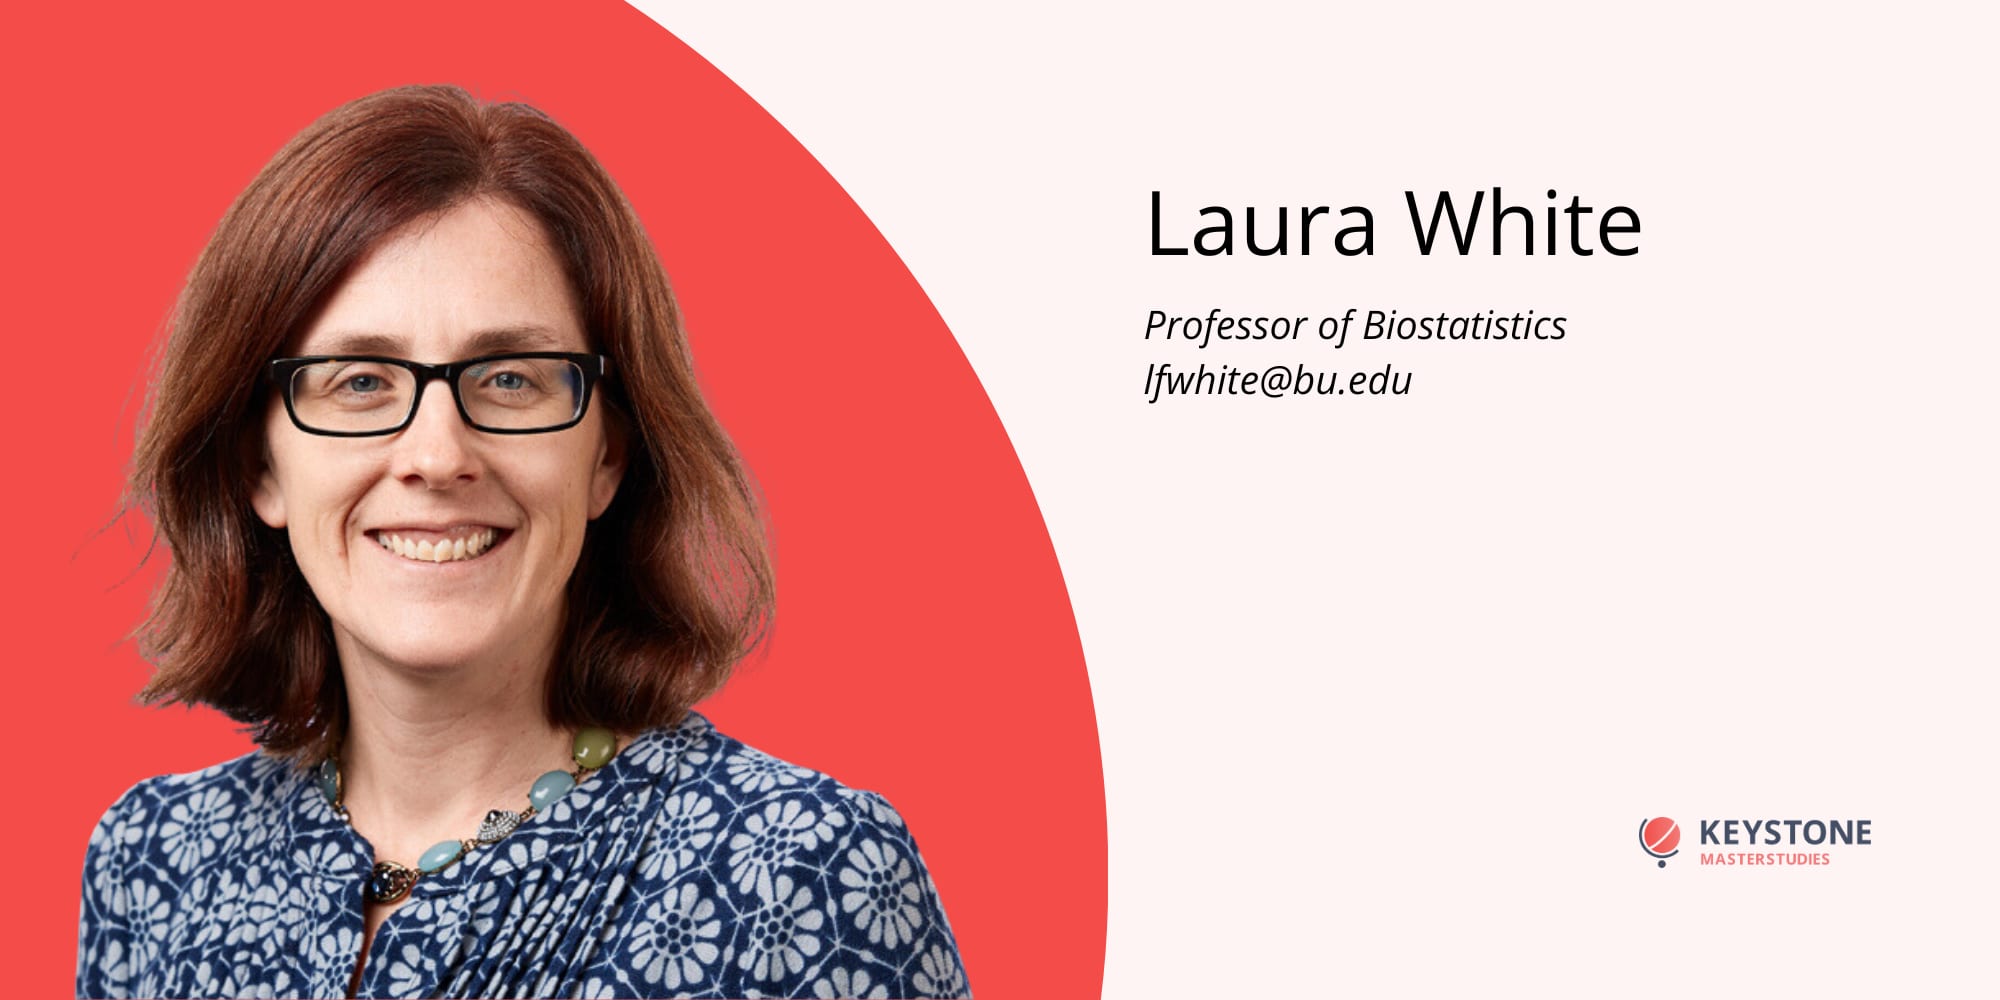 Laura White - Professor of Biostatistics